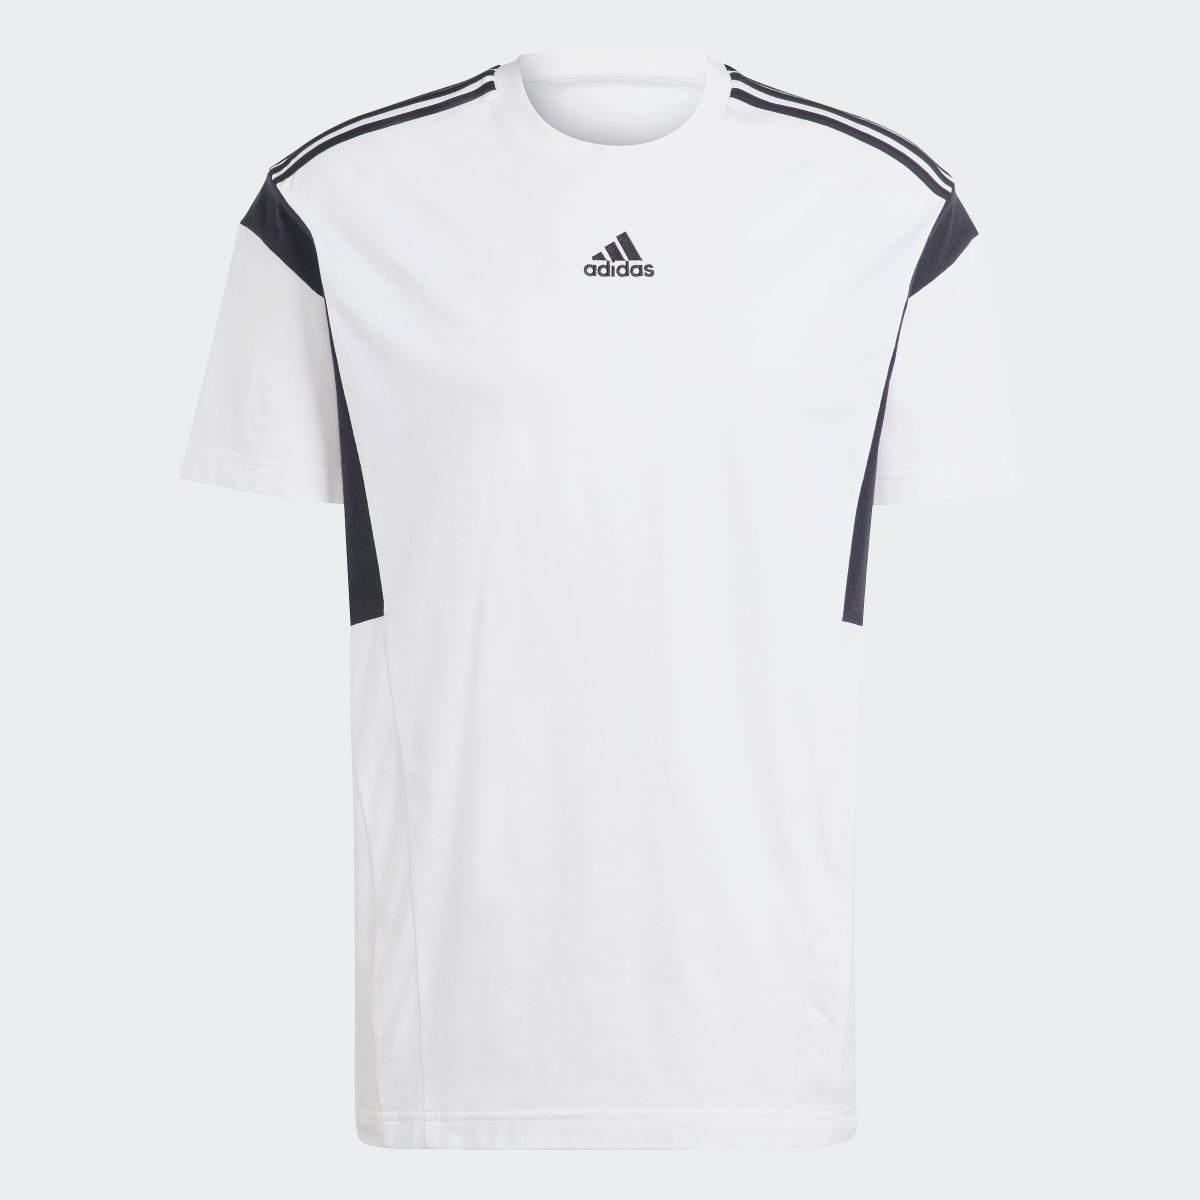 Adidas T-shirt colorblock. 5